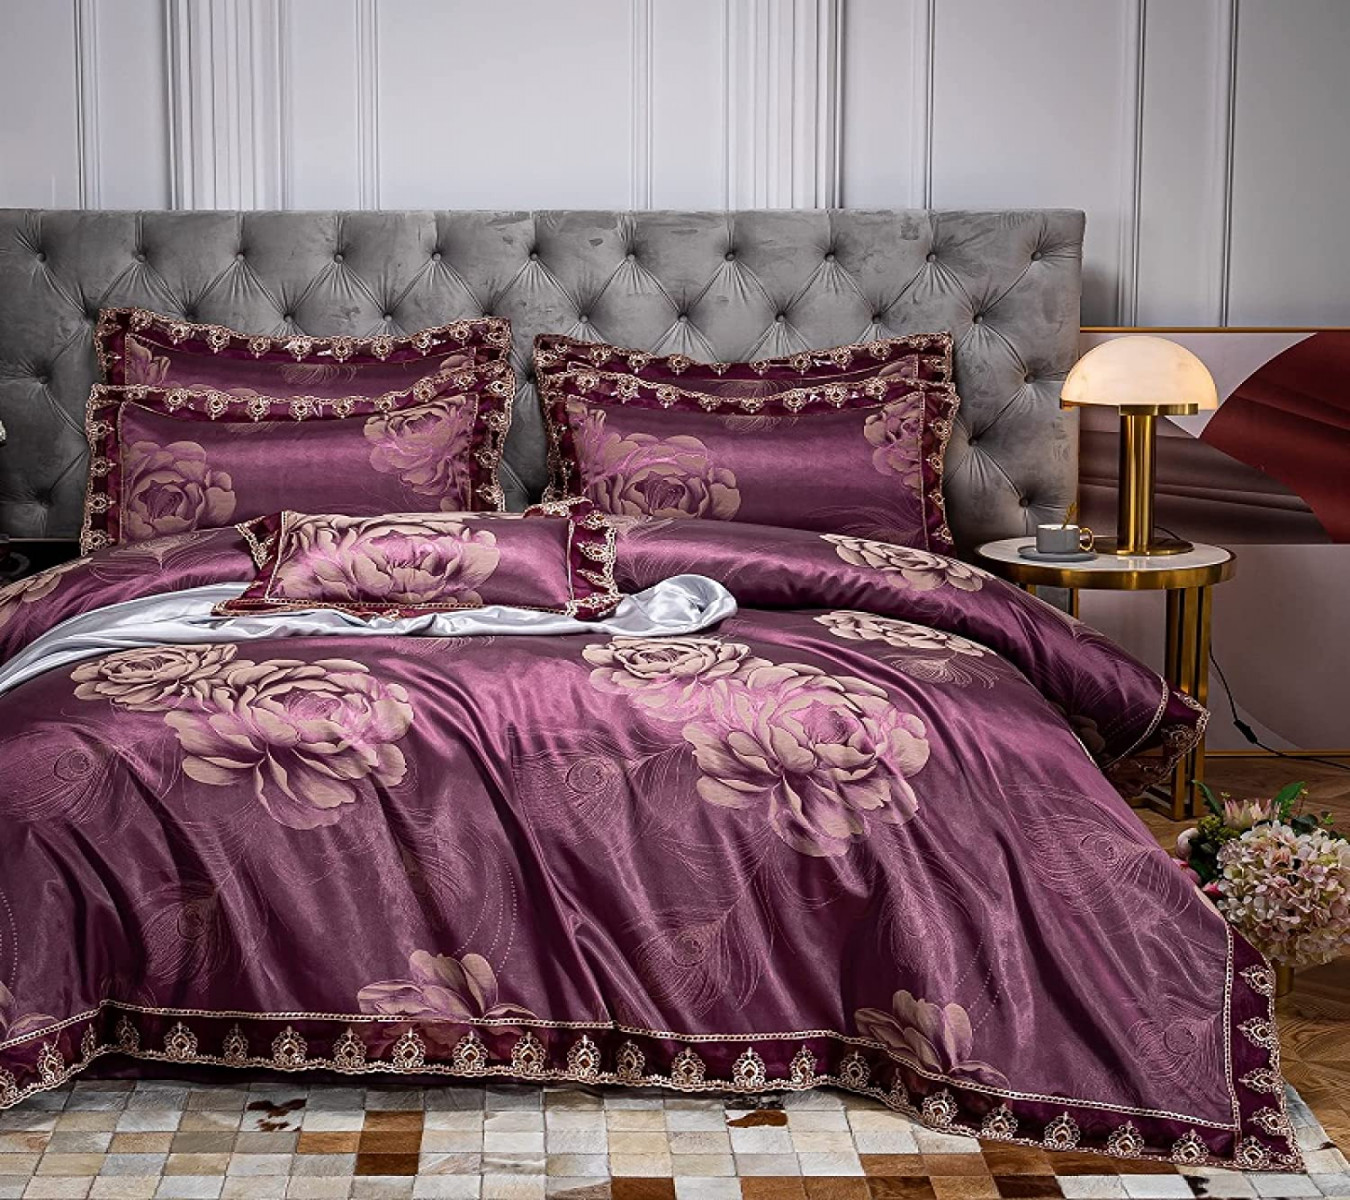 Luxury Bedding Sets King Size